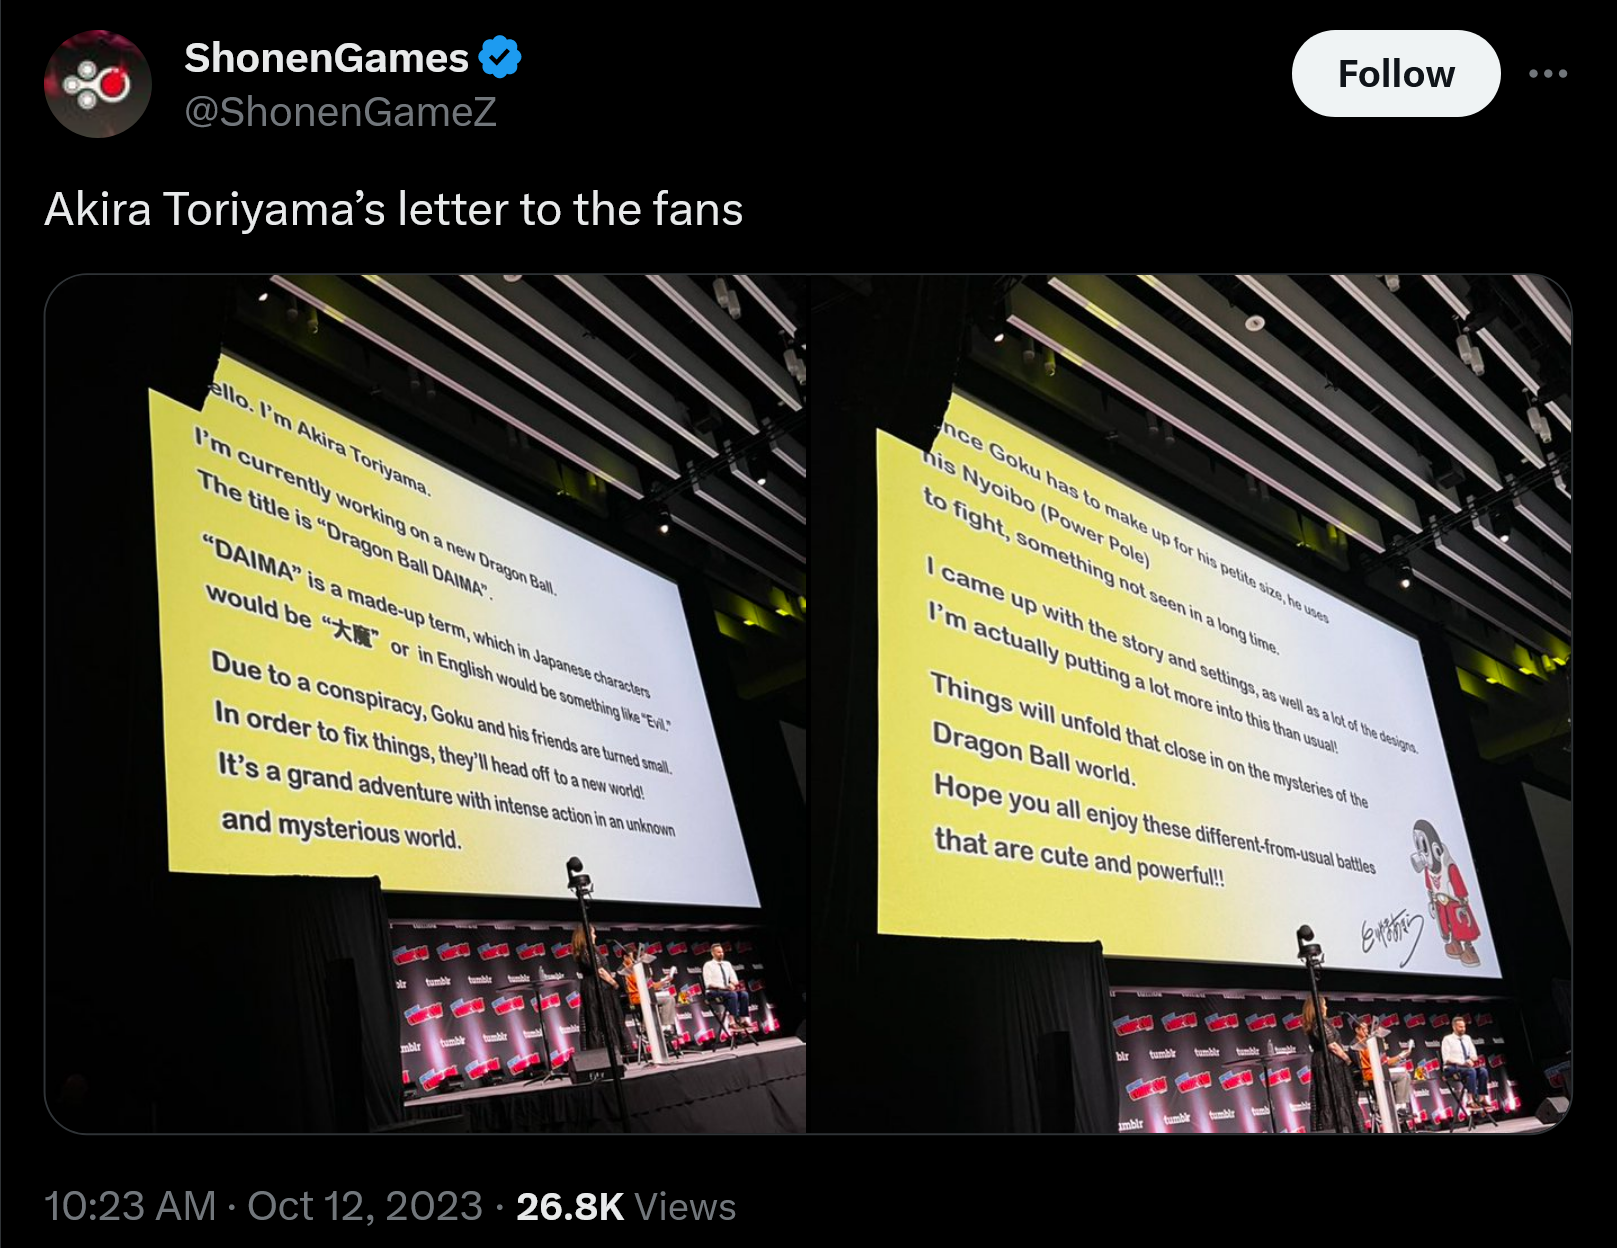 Akira Toriyama's message to Dragon Ball fans announcing Dragon Ball Daima via ShonenGameZ on X